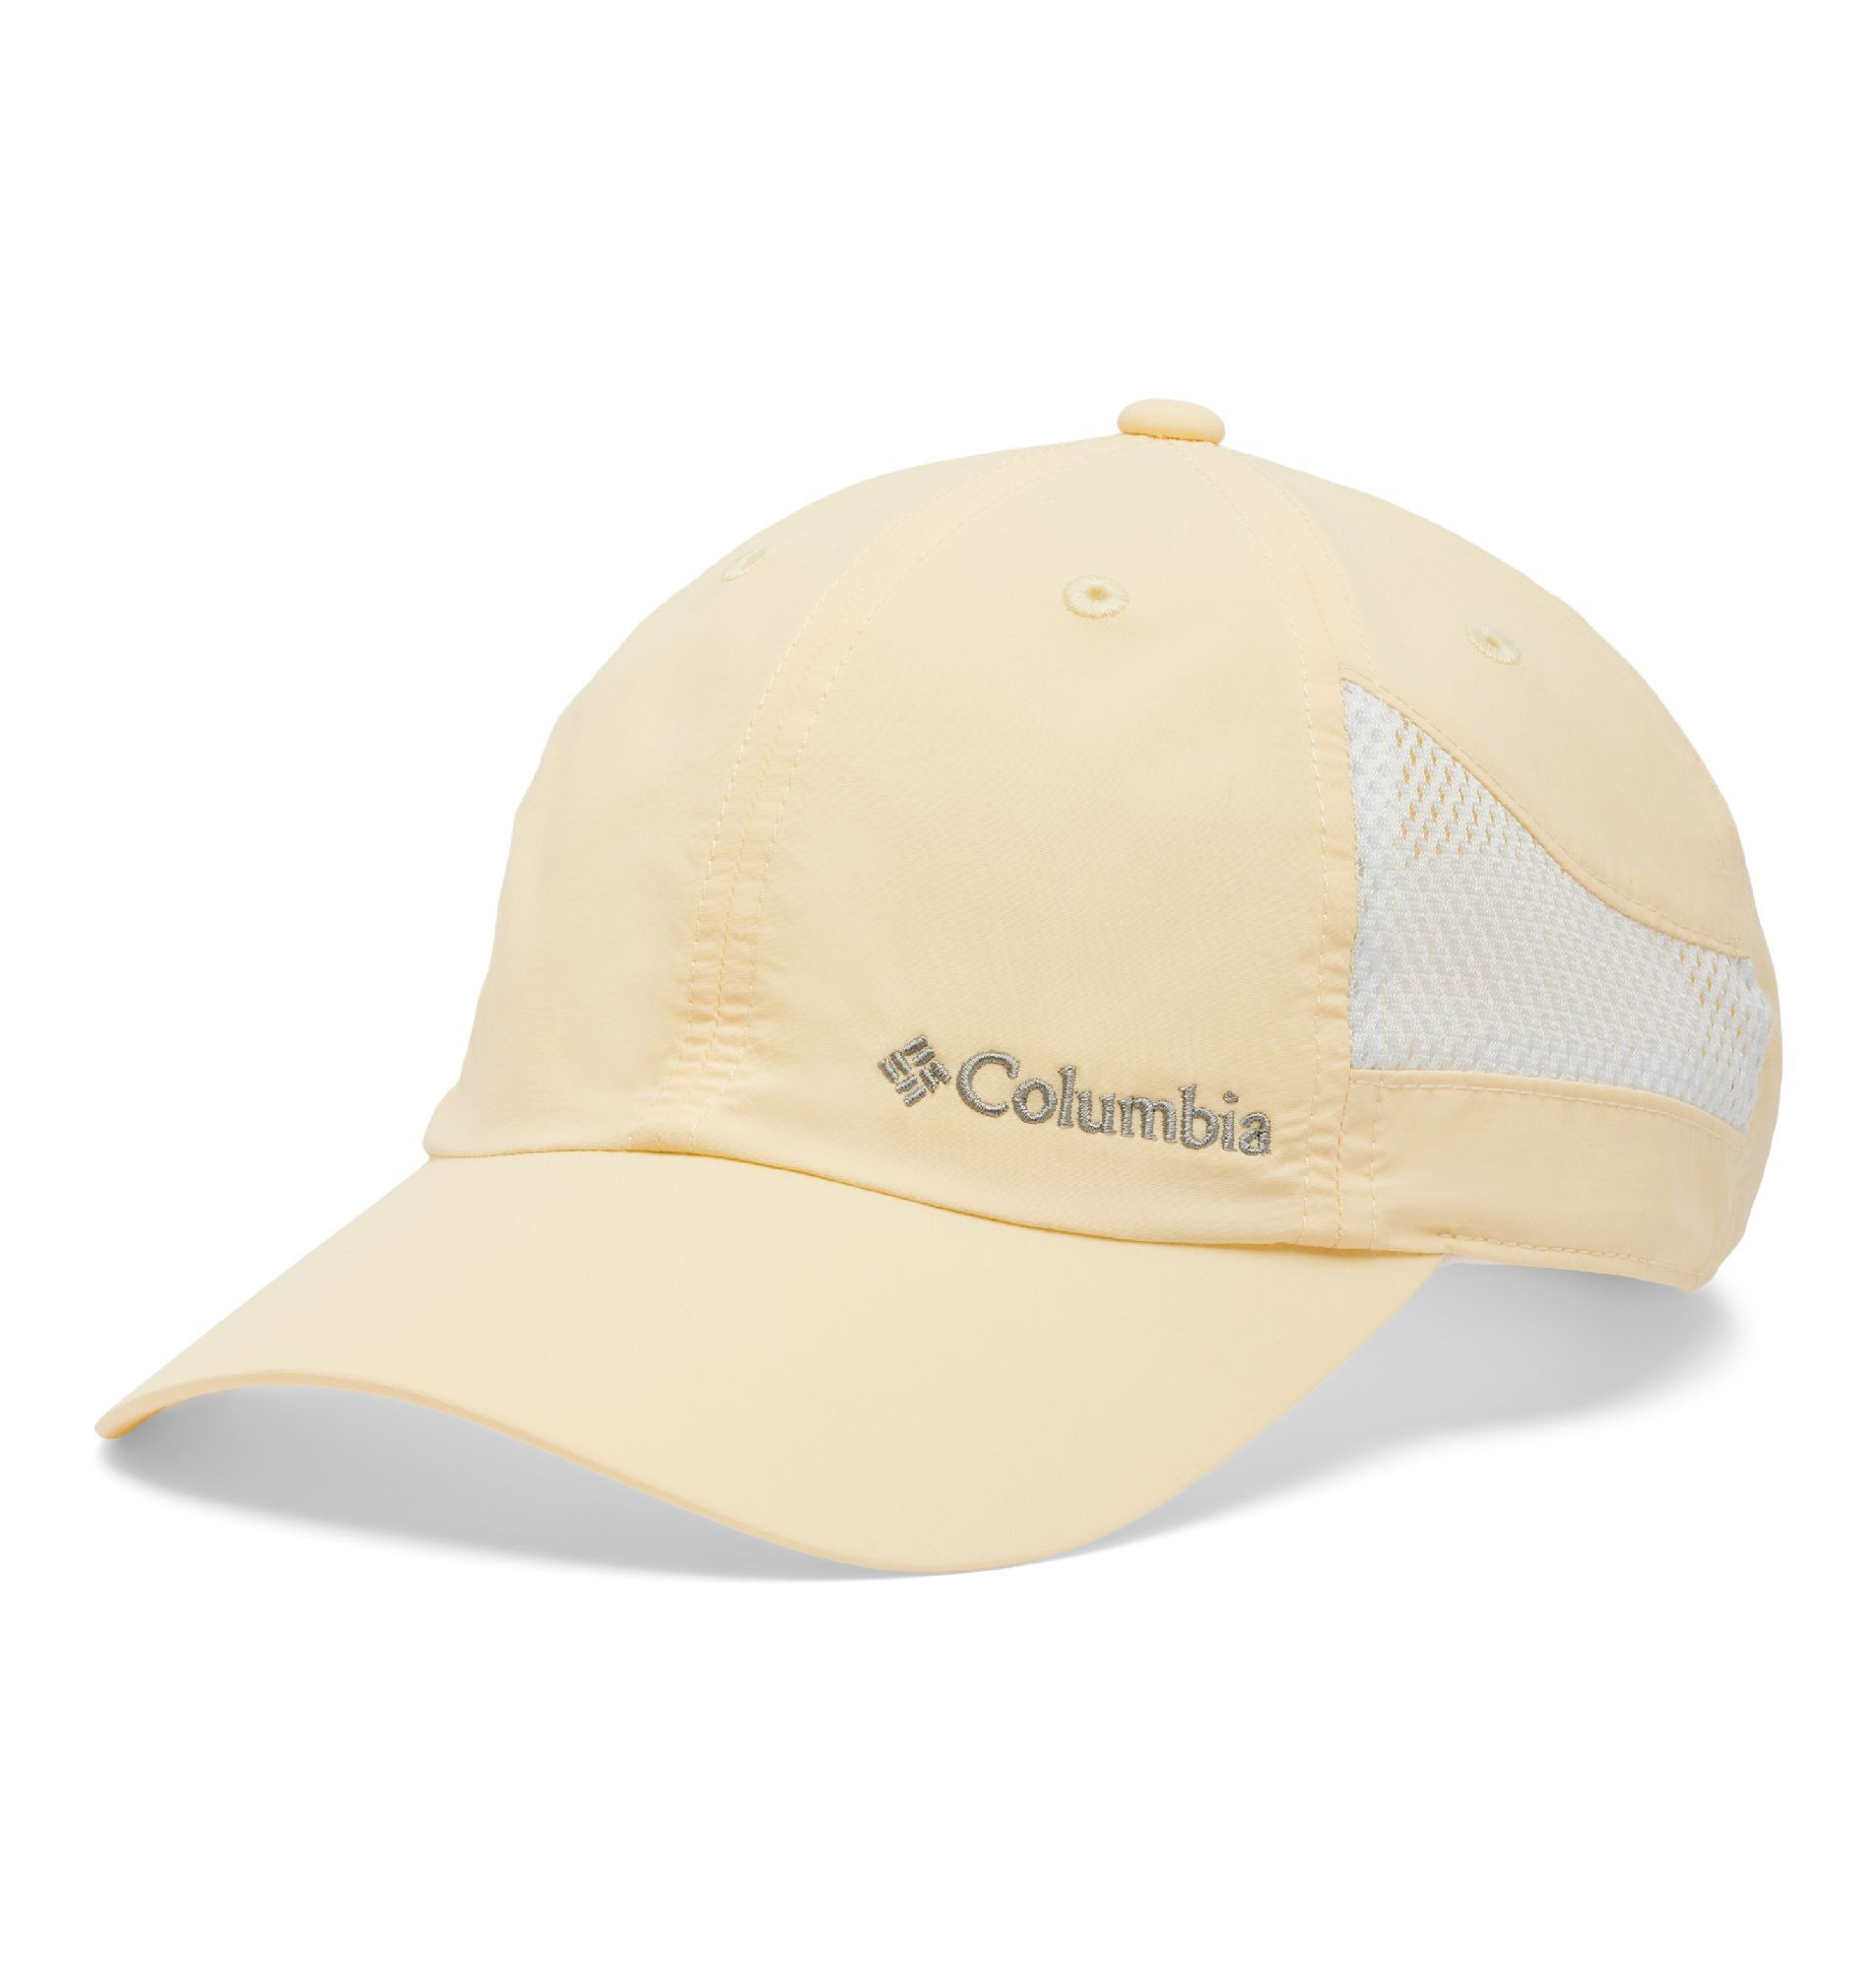 Columbia Tech Shade Hat - Cap